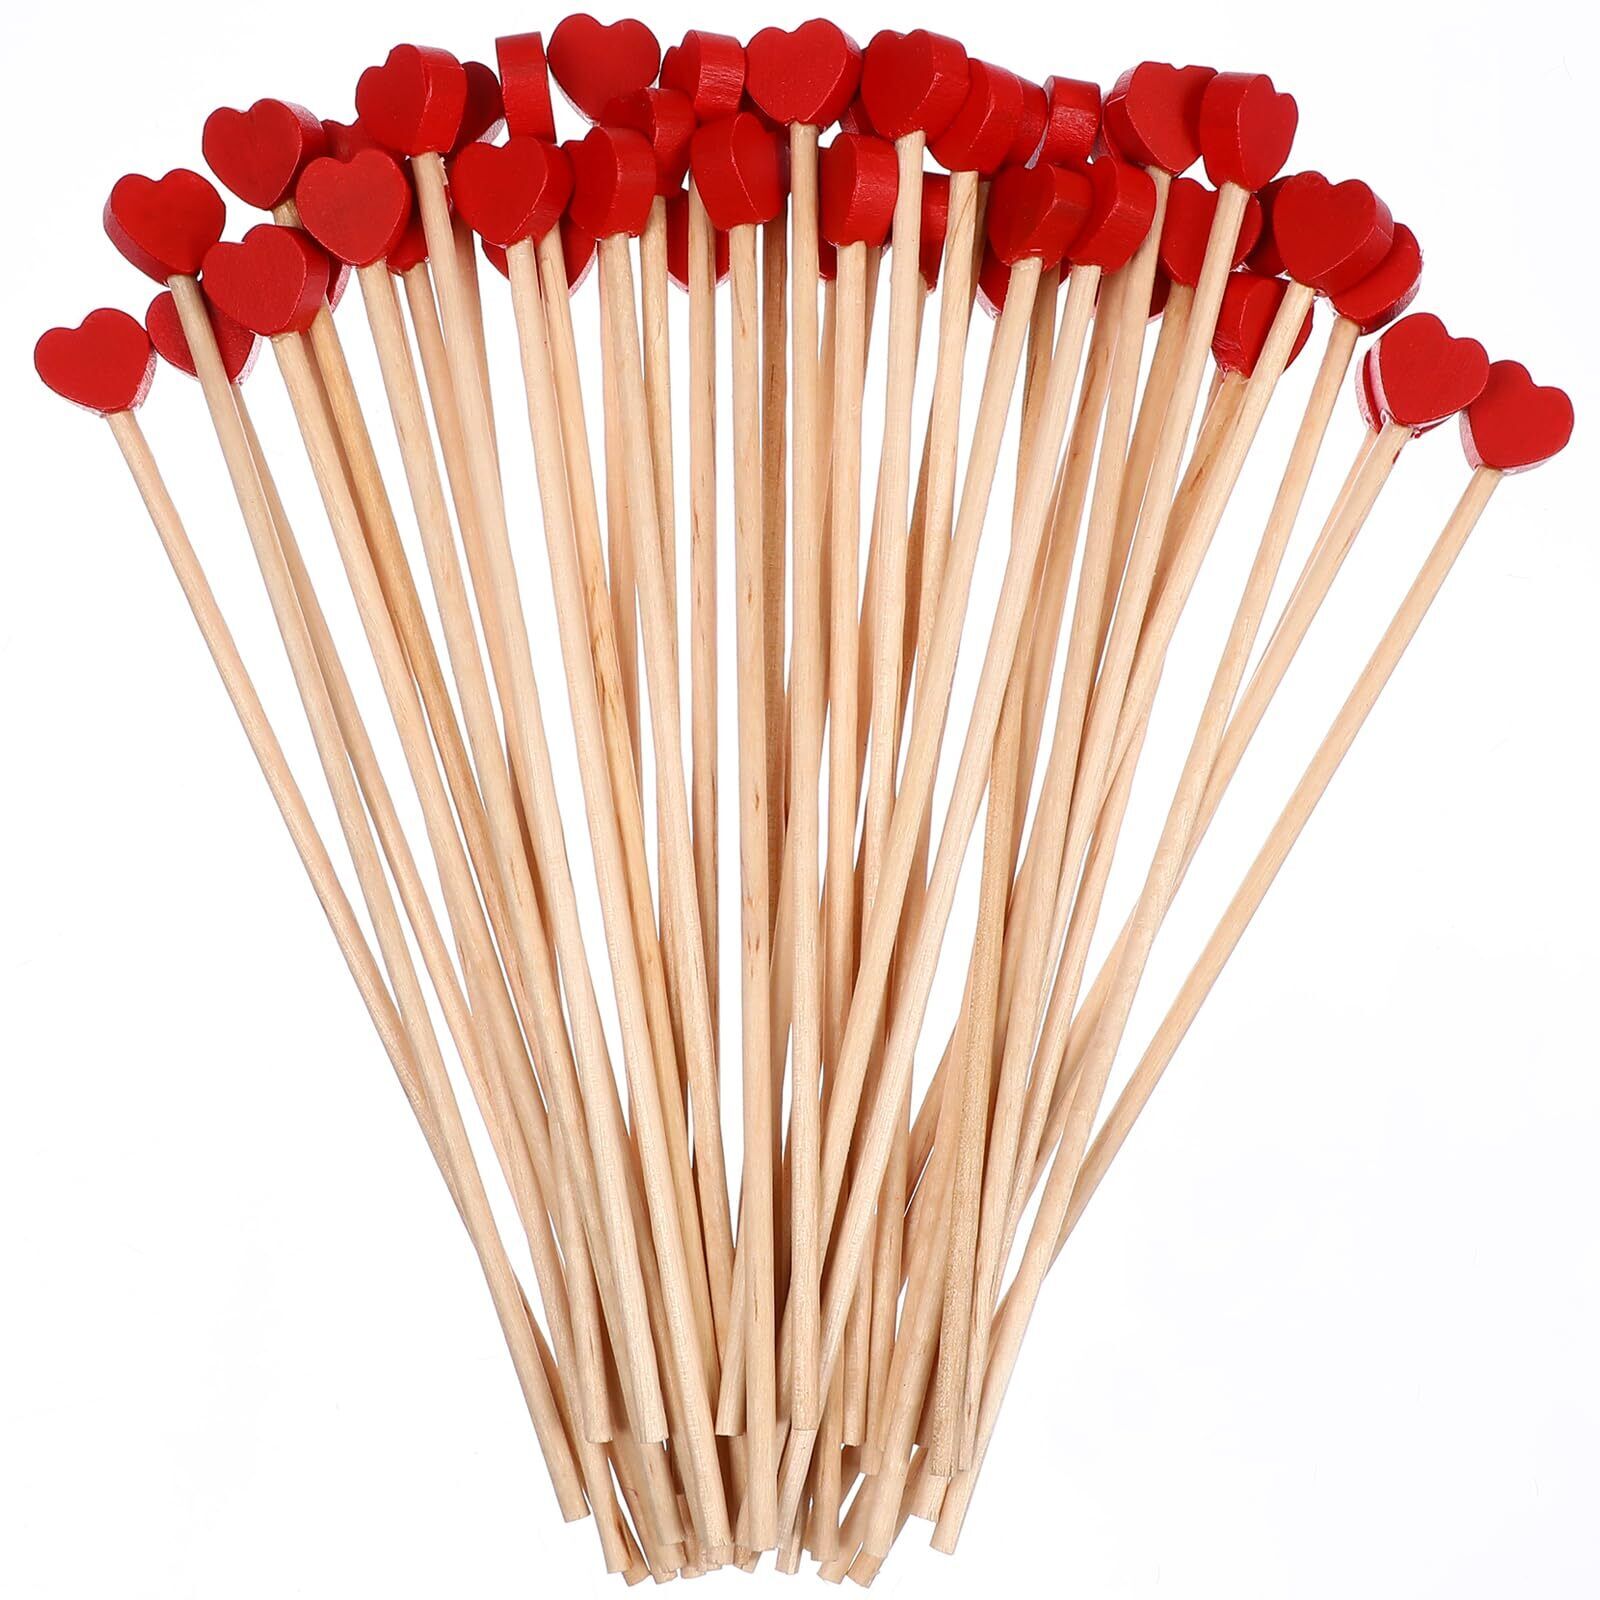 Cabilock 100 Pcs Wooden Coffee Stirrers 6.1 Inch Red Heart Stirring Sticks Creat